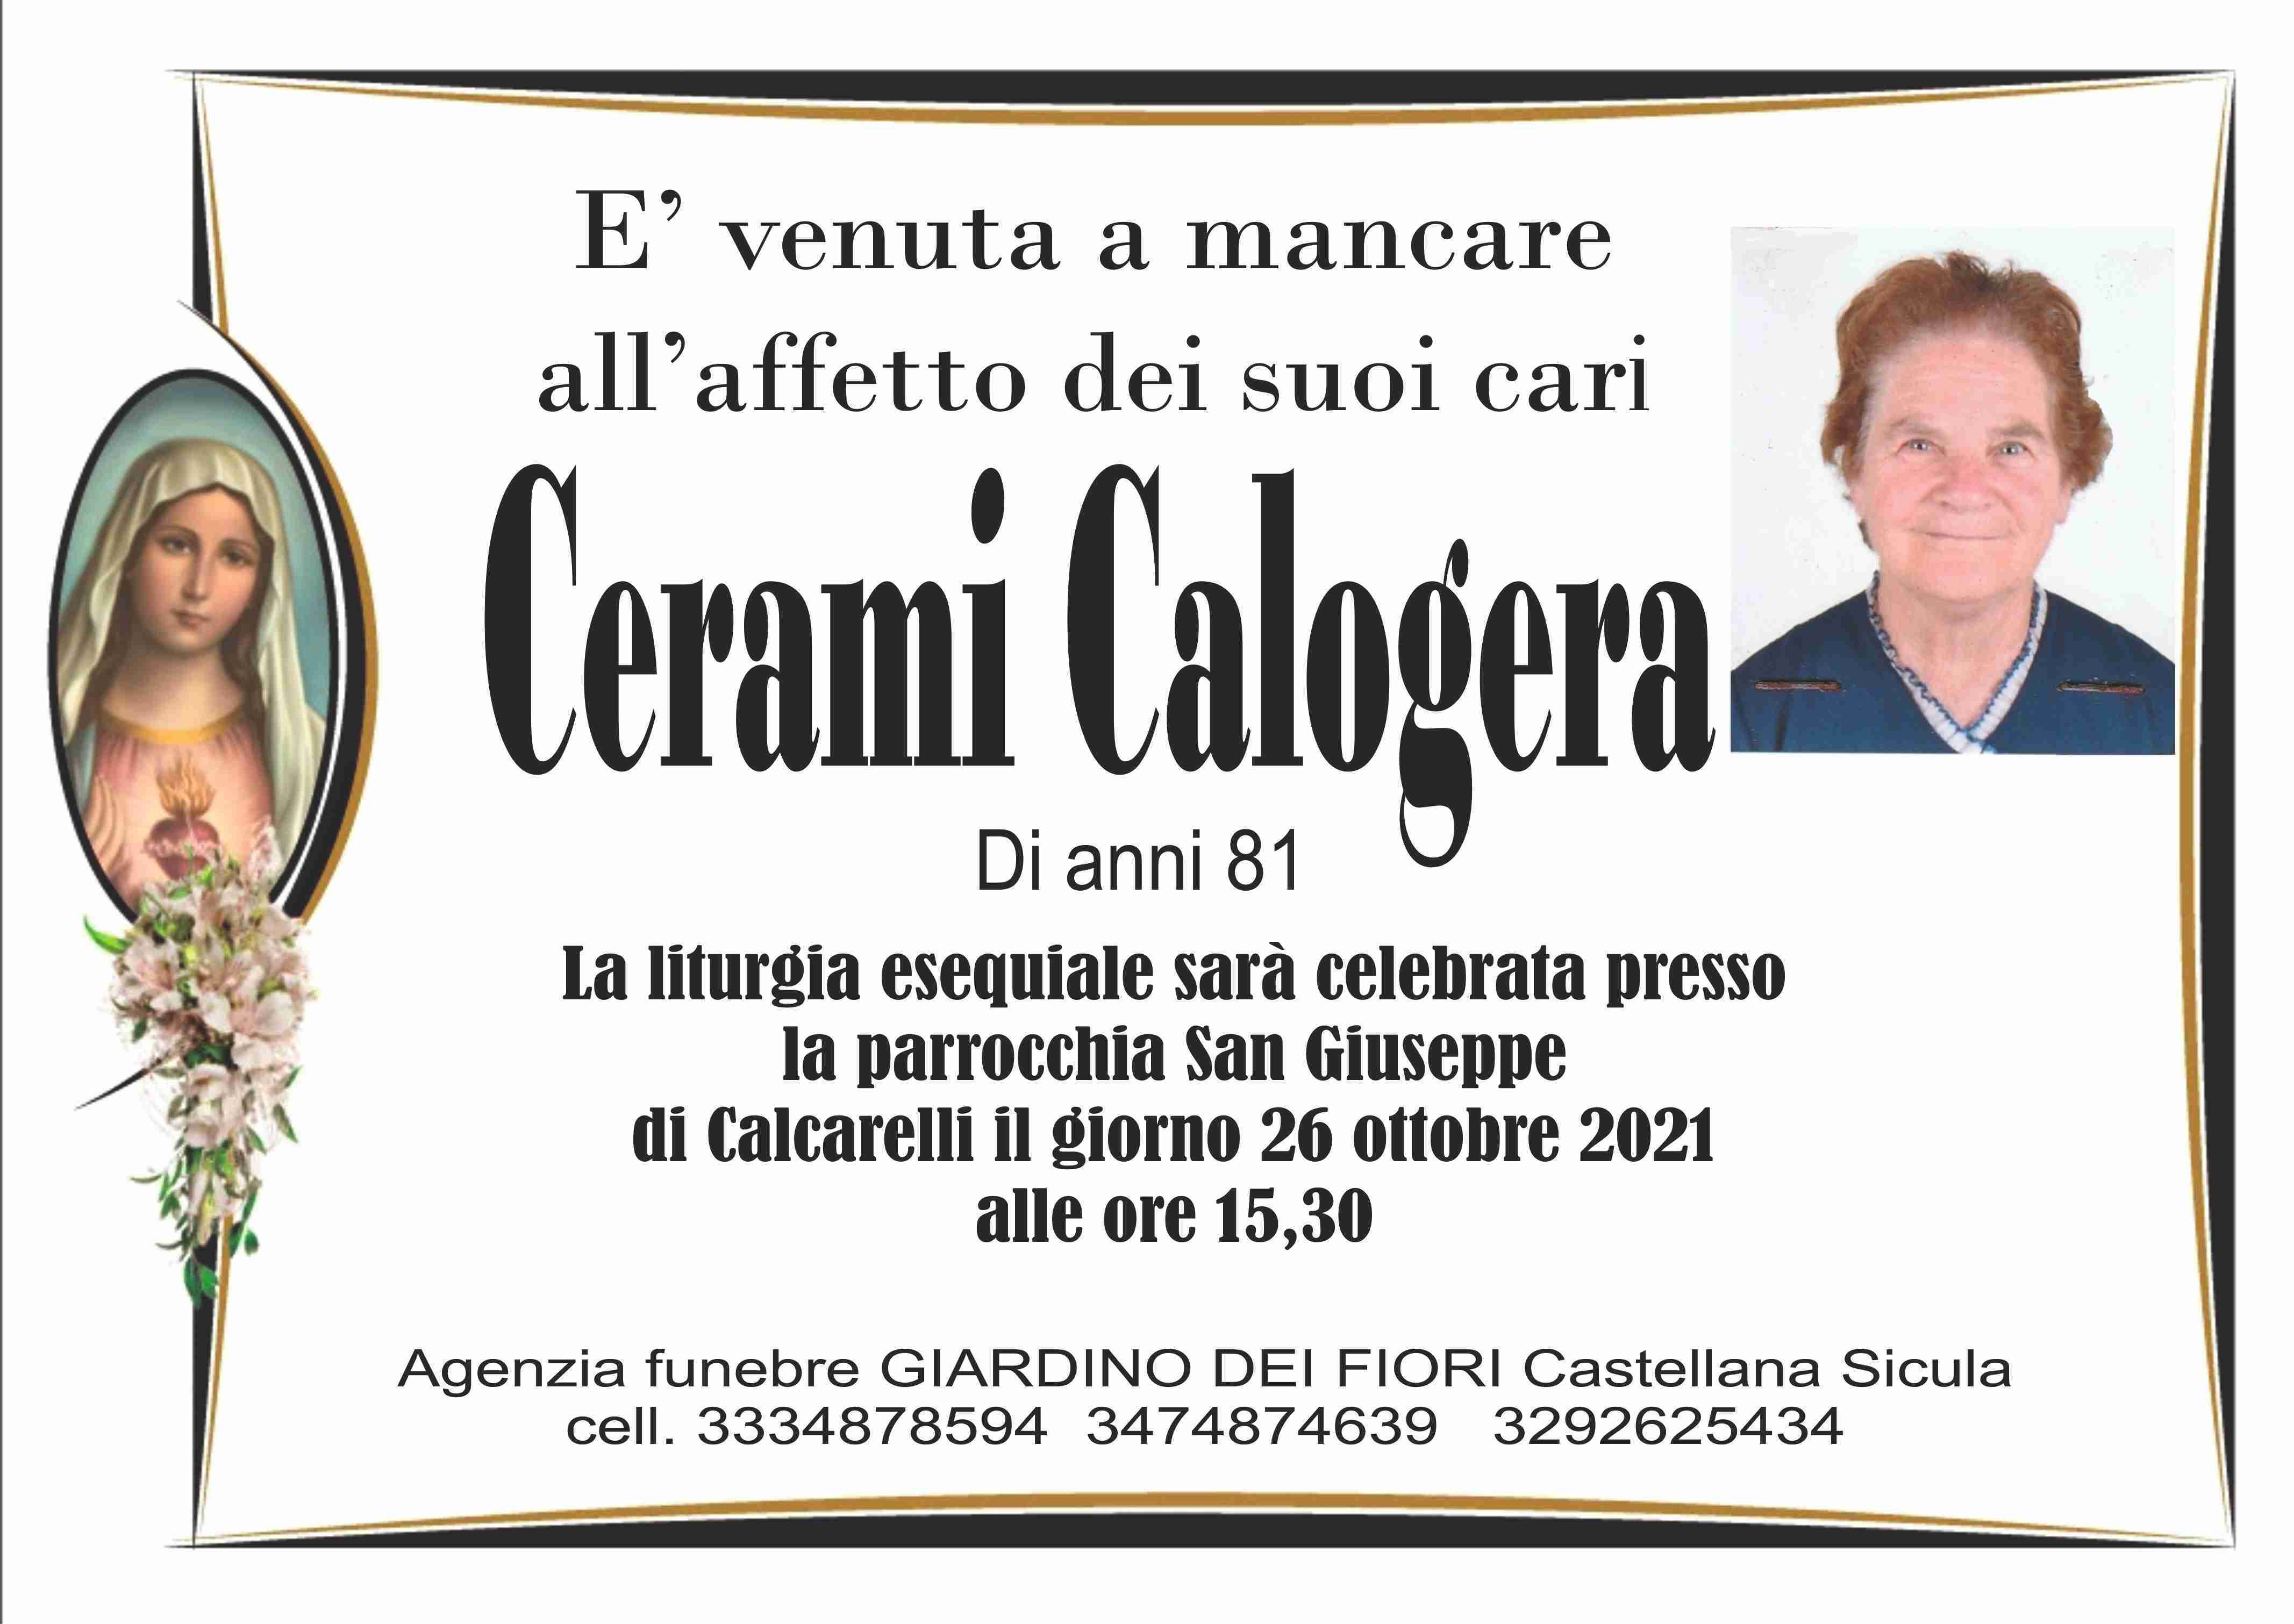 Calogera Cerami